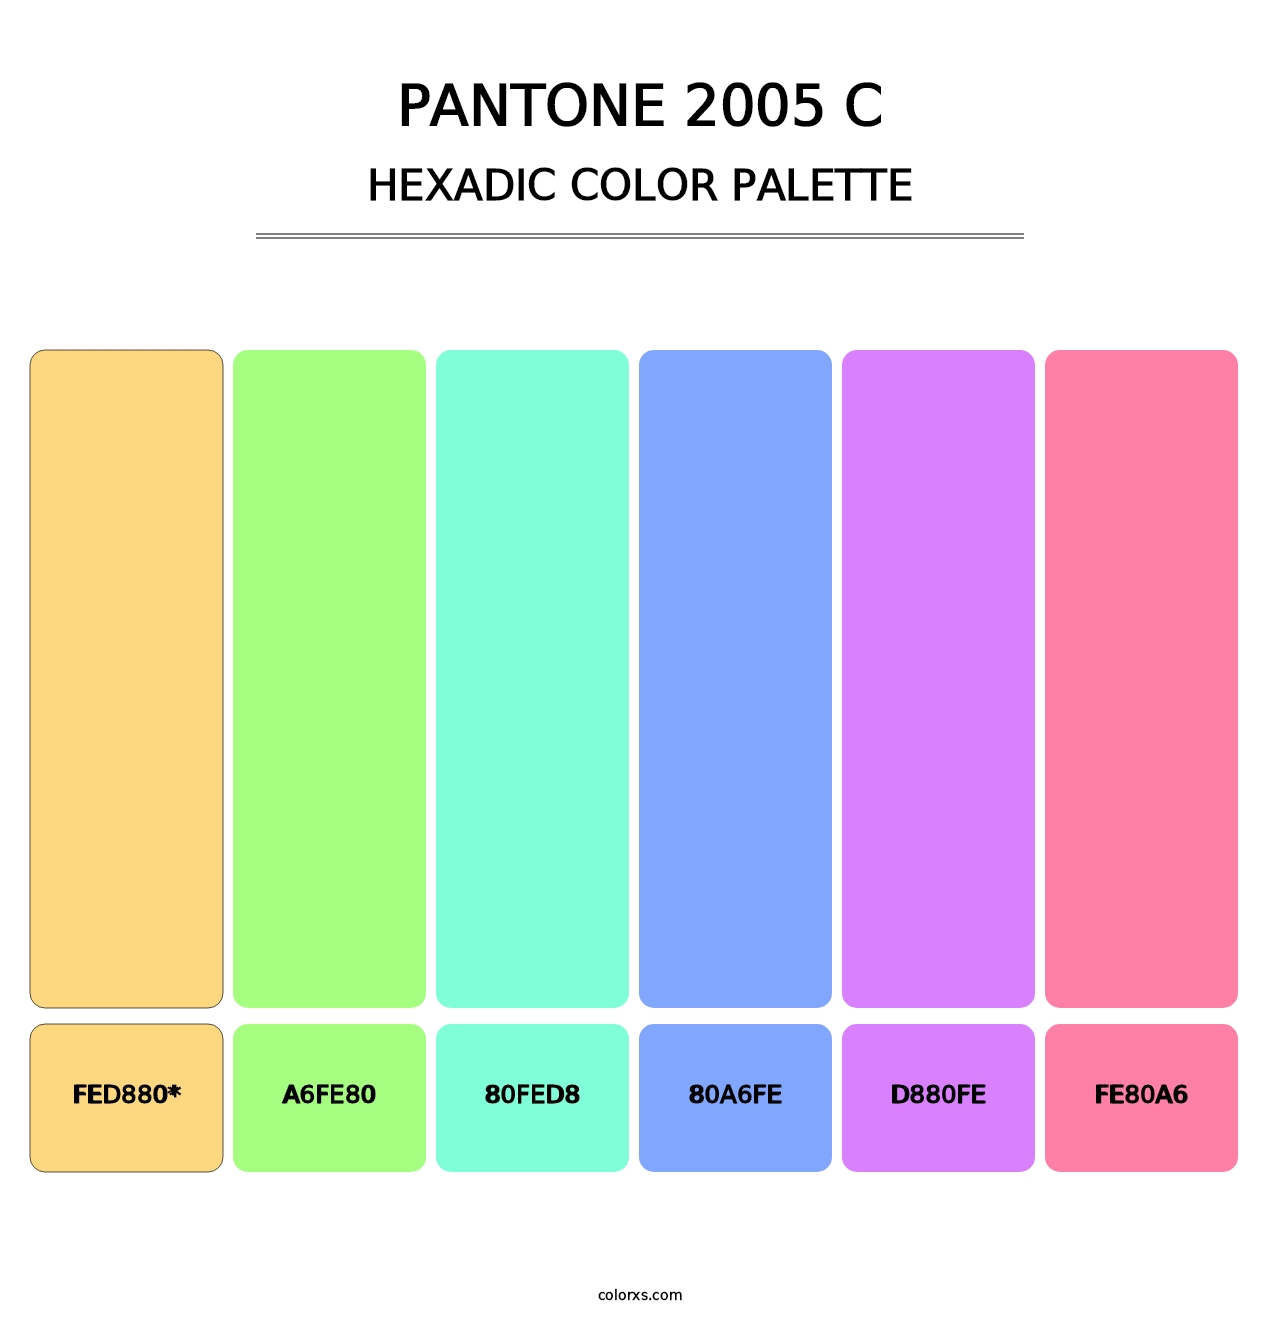 PANTONE 2005 C - Hexadic Color Palette